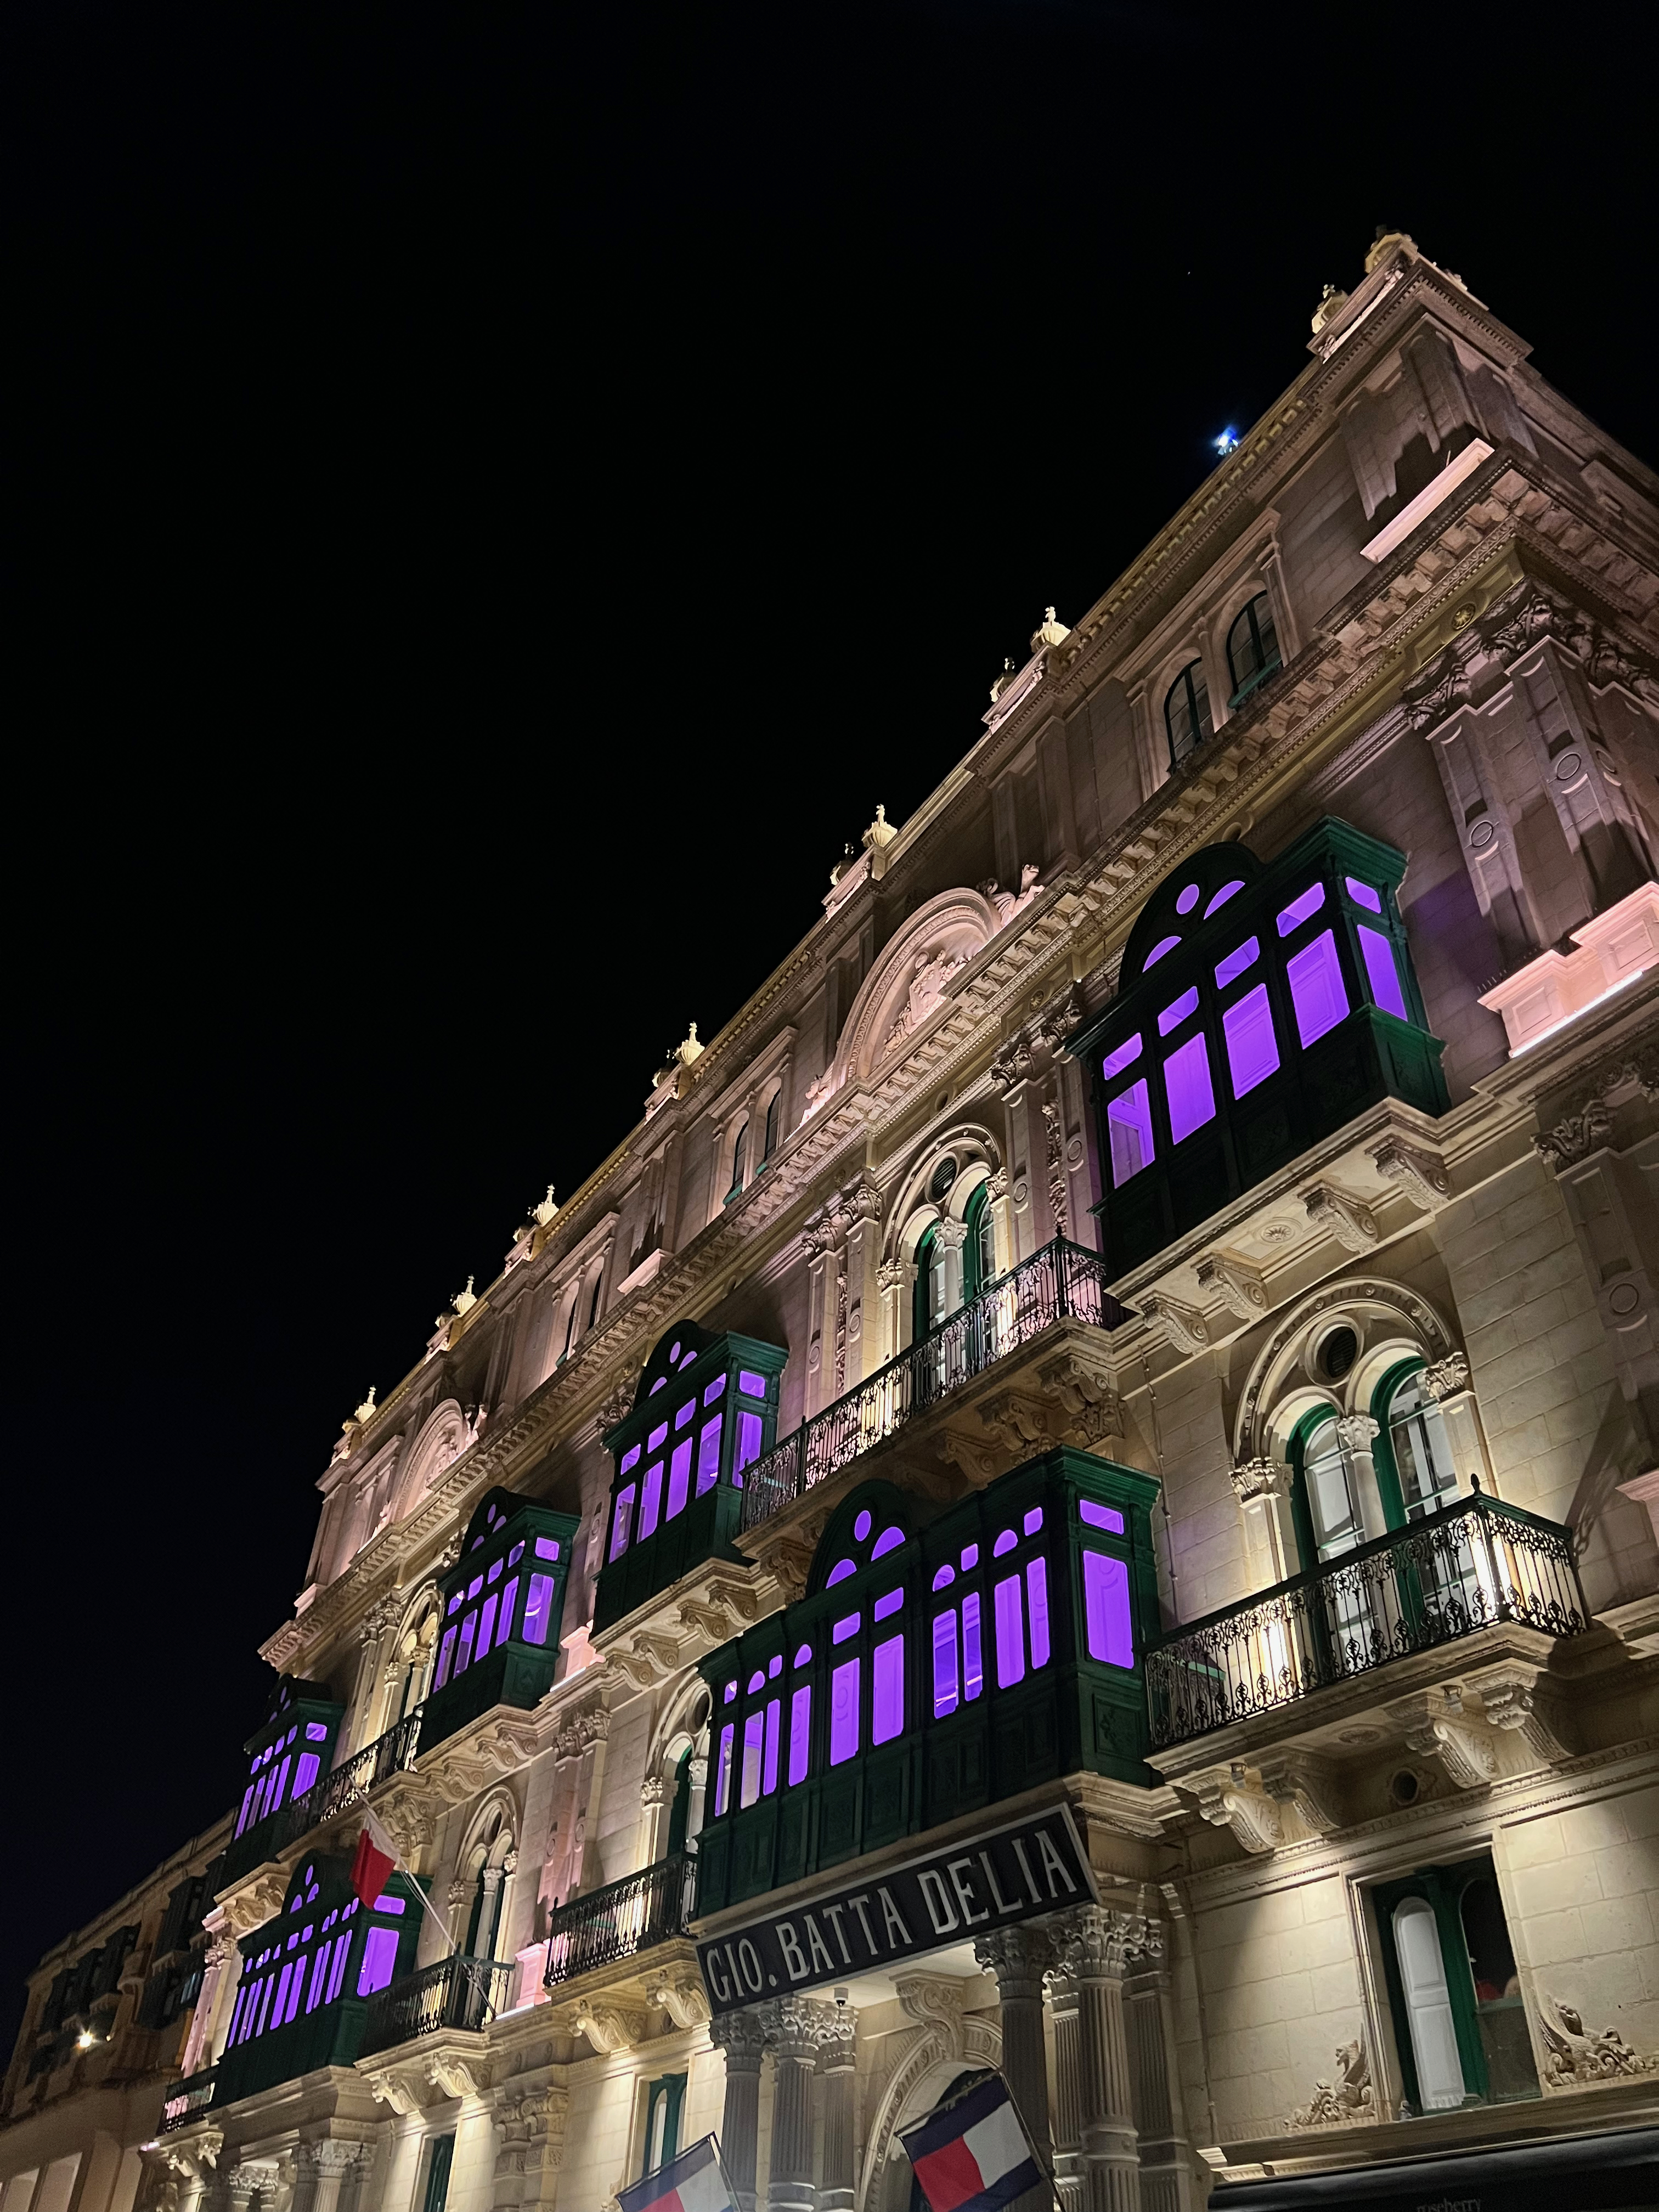 Illuminated building in Valetta